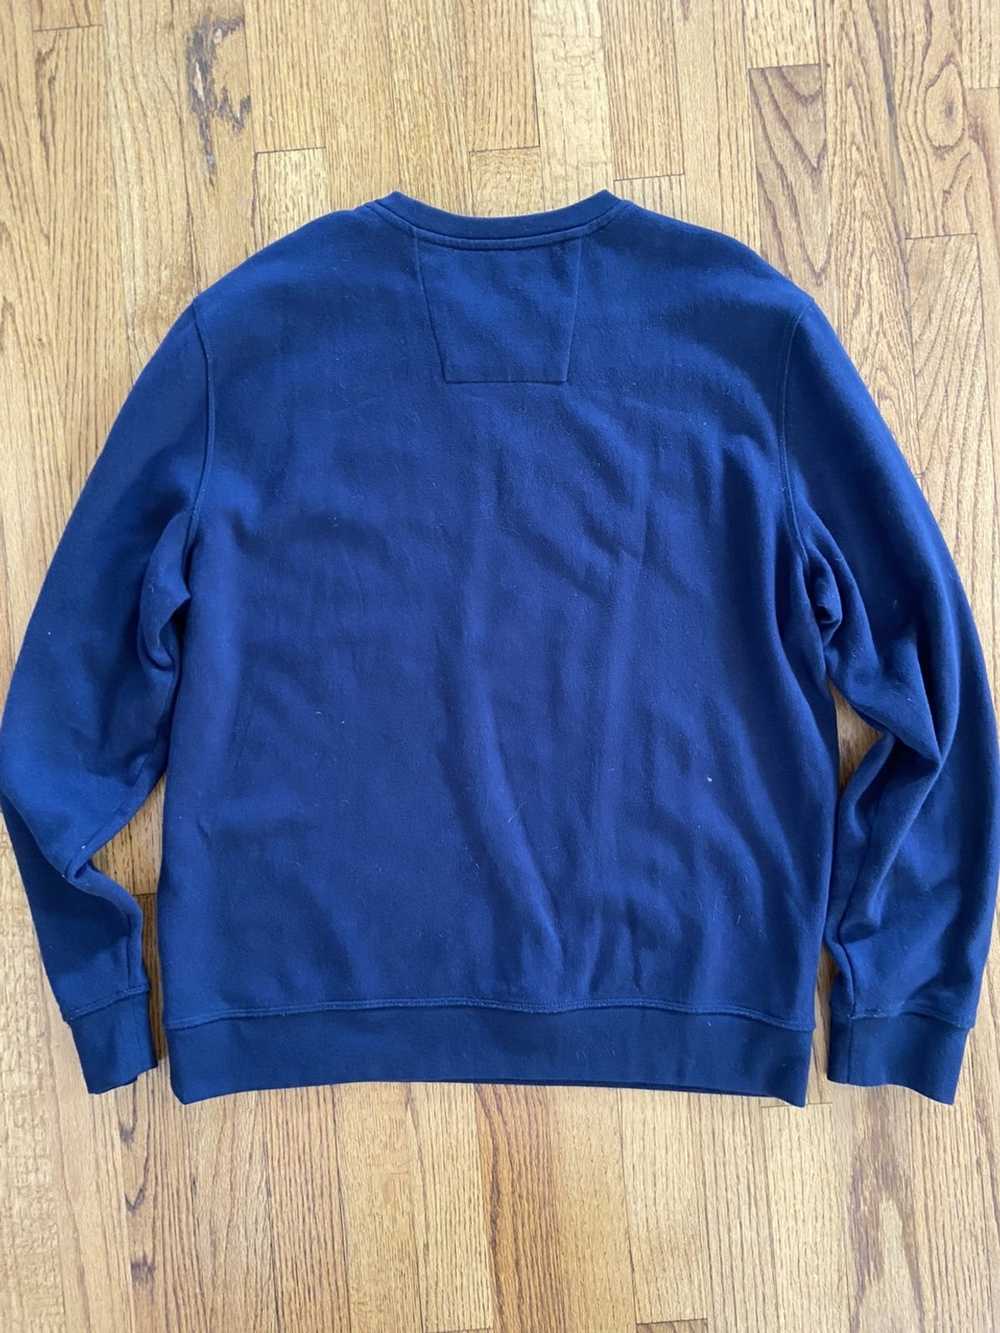 Nautica × Vintage Vintage Nautica Crewneck Sweater - image 2